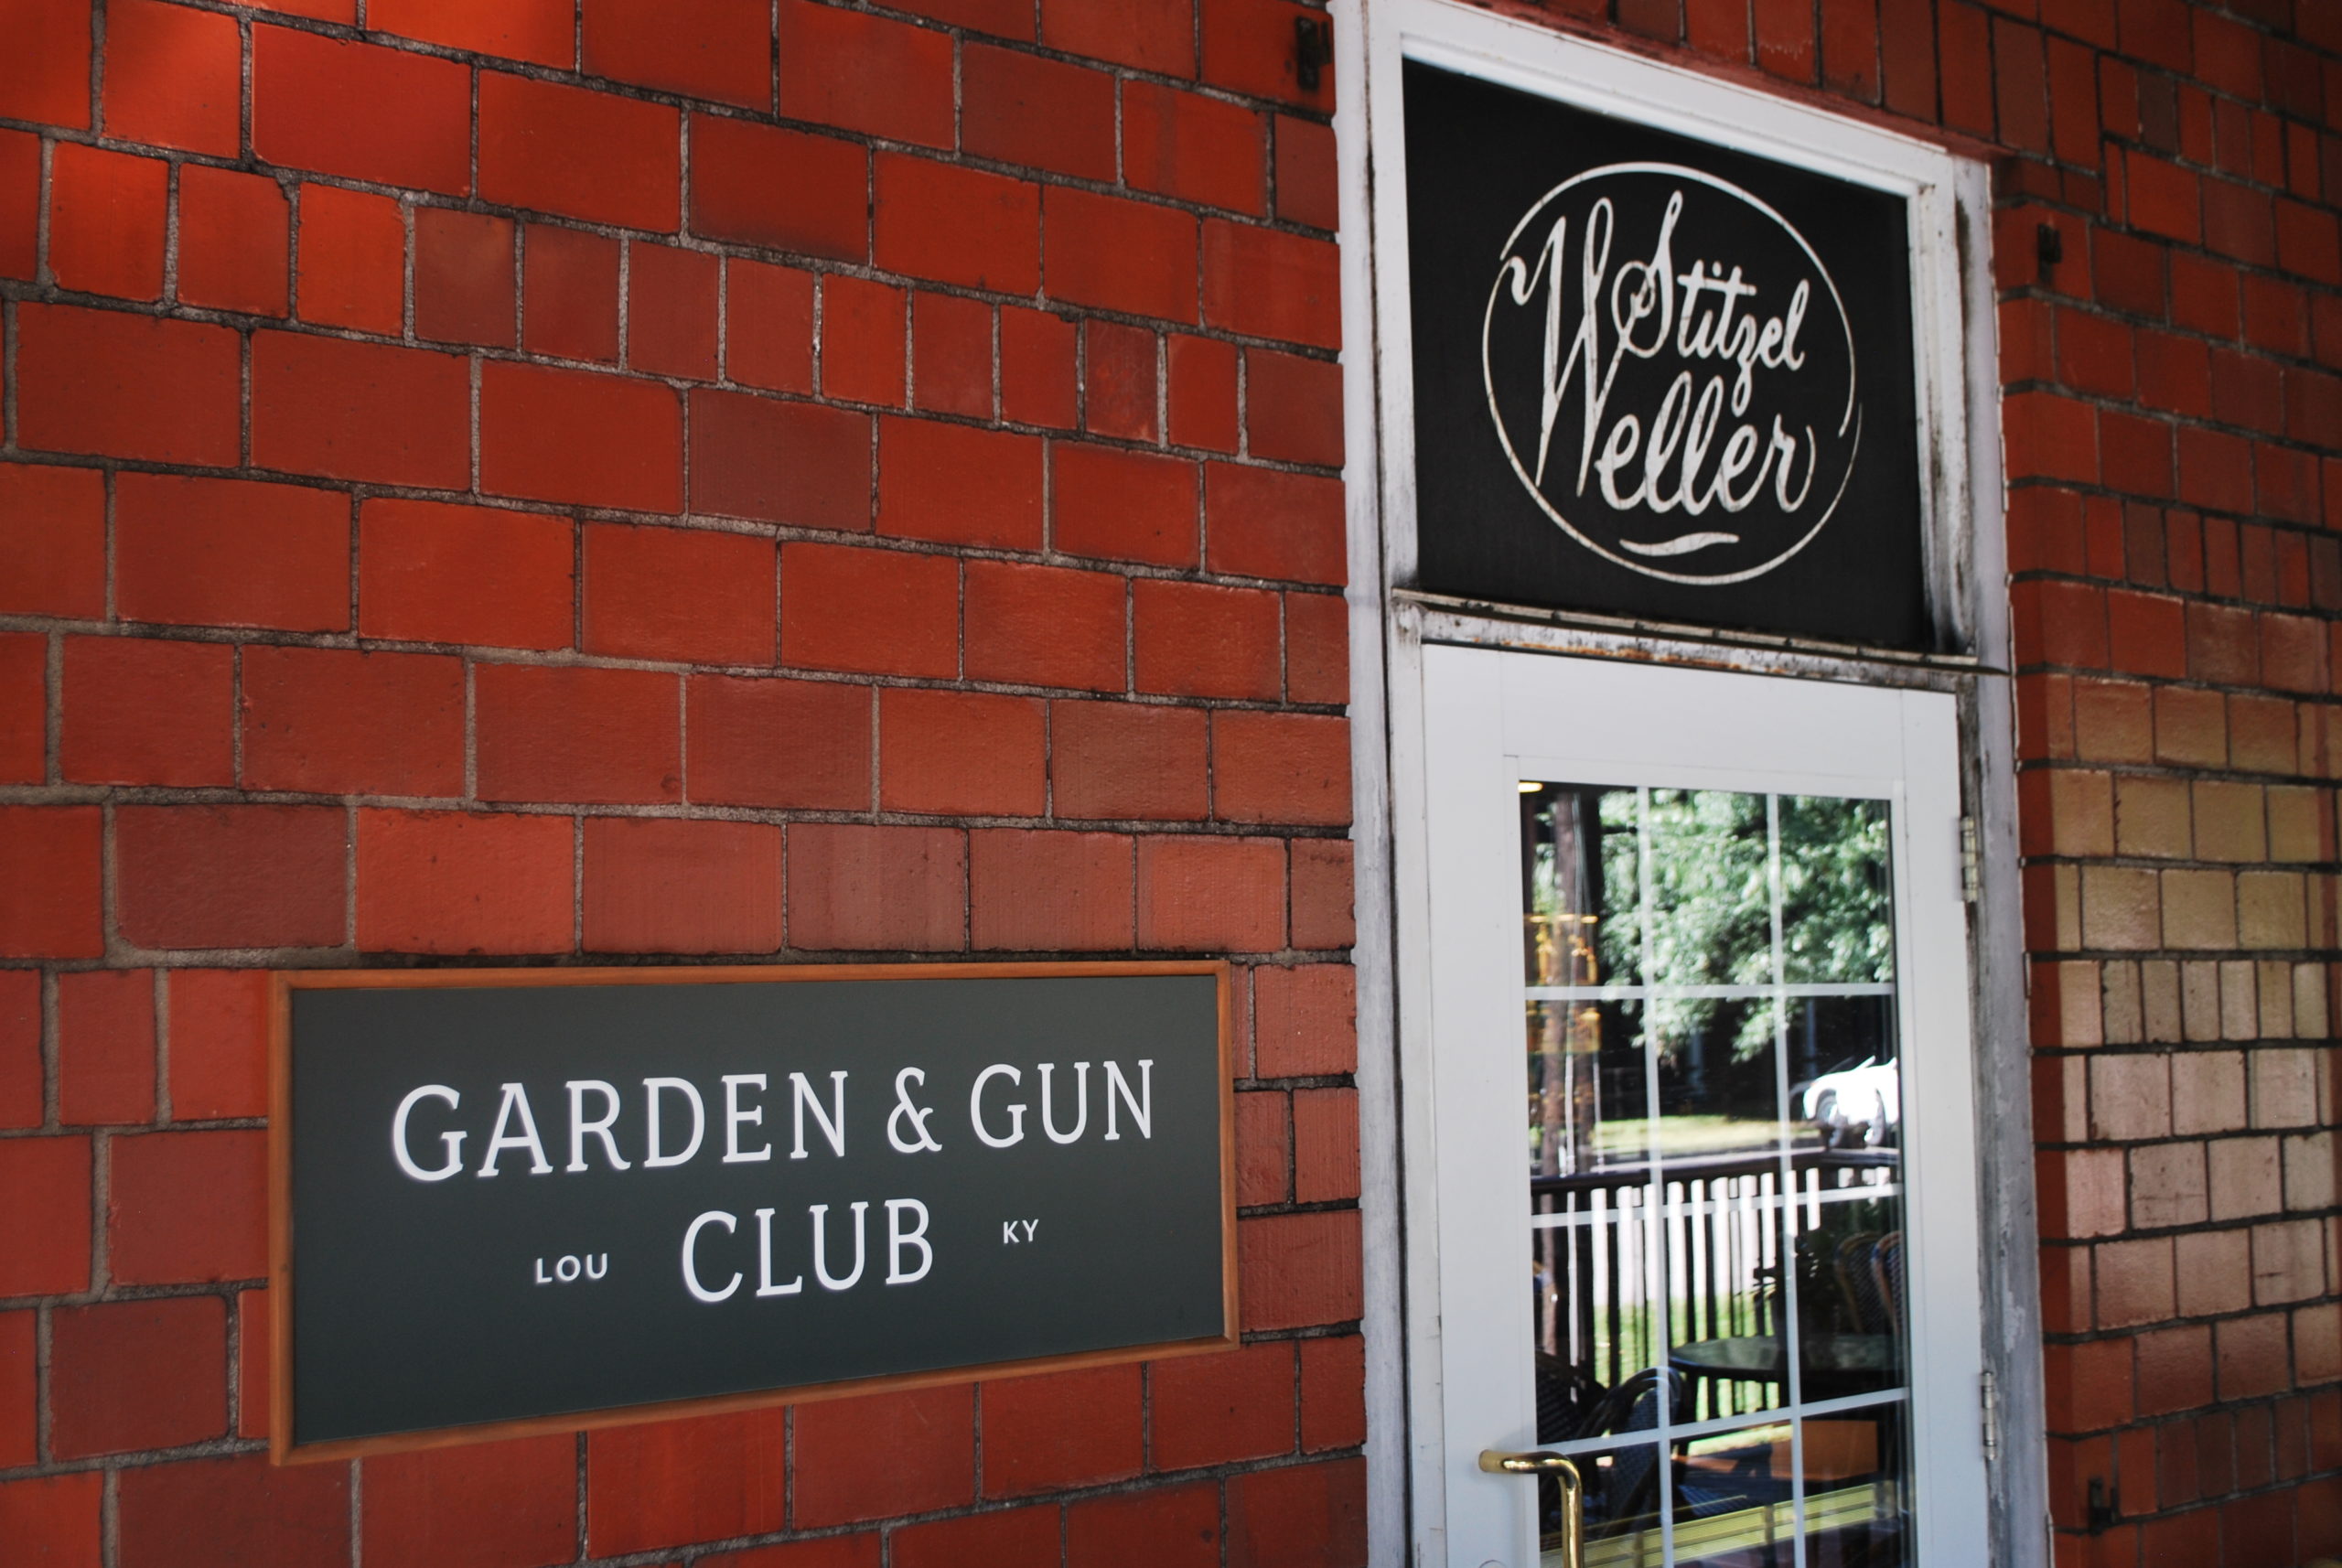 Stitzel-Weller debuts new Garden & Gun Club this week